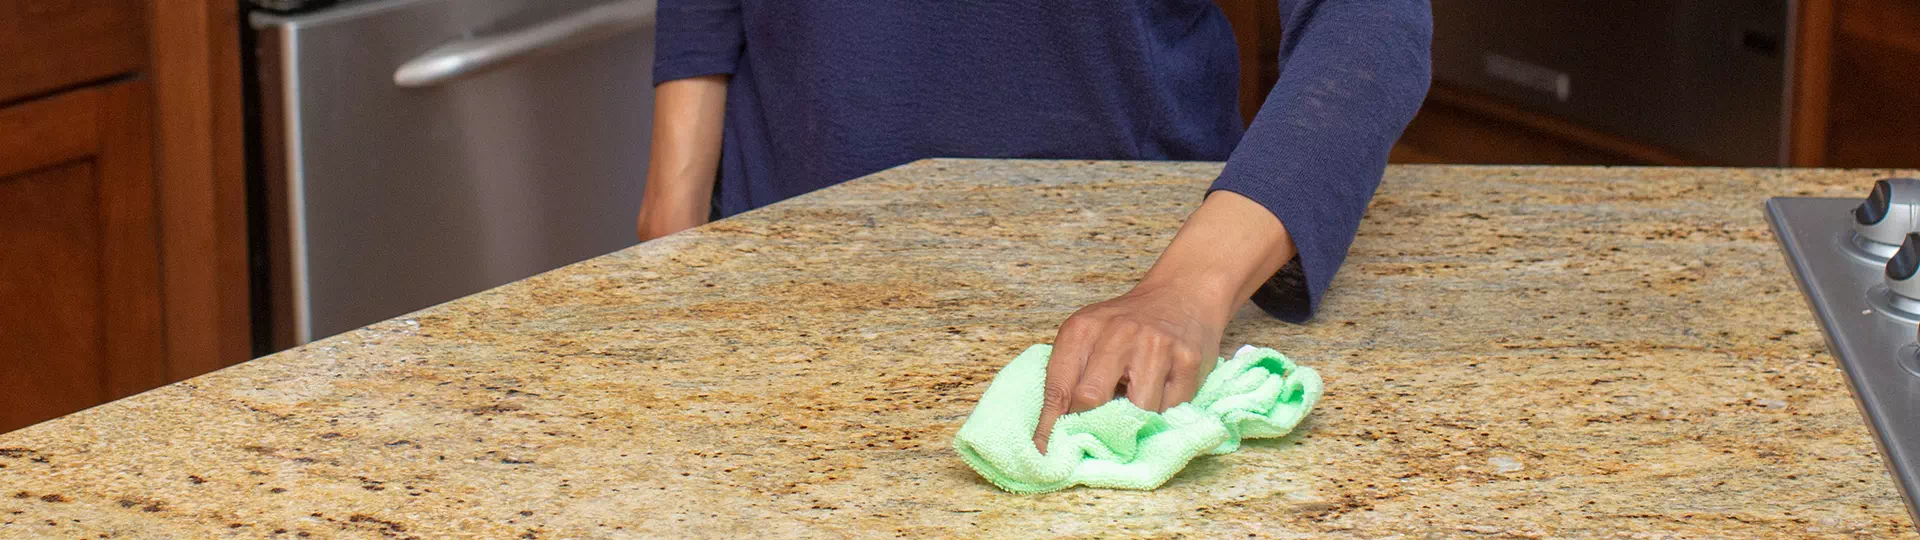 How to Clean Granite Countertops - Simple Green